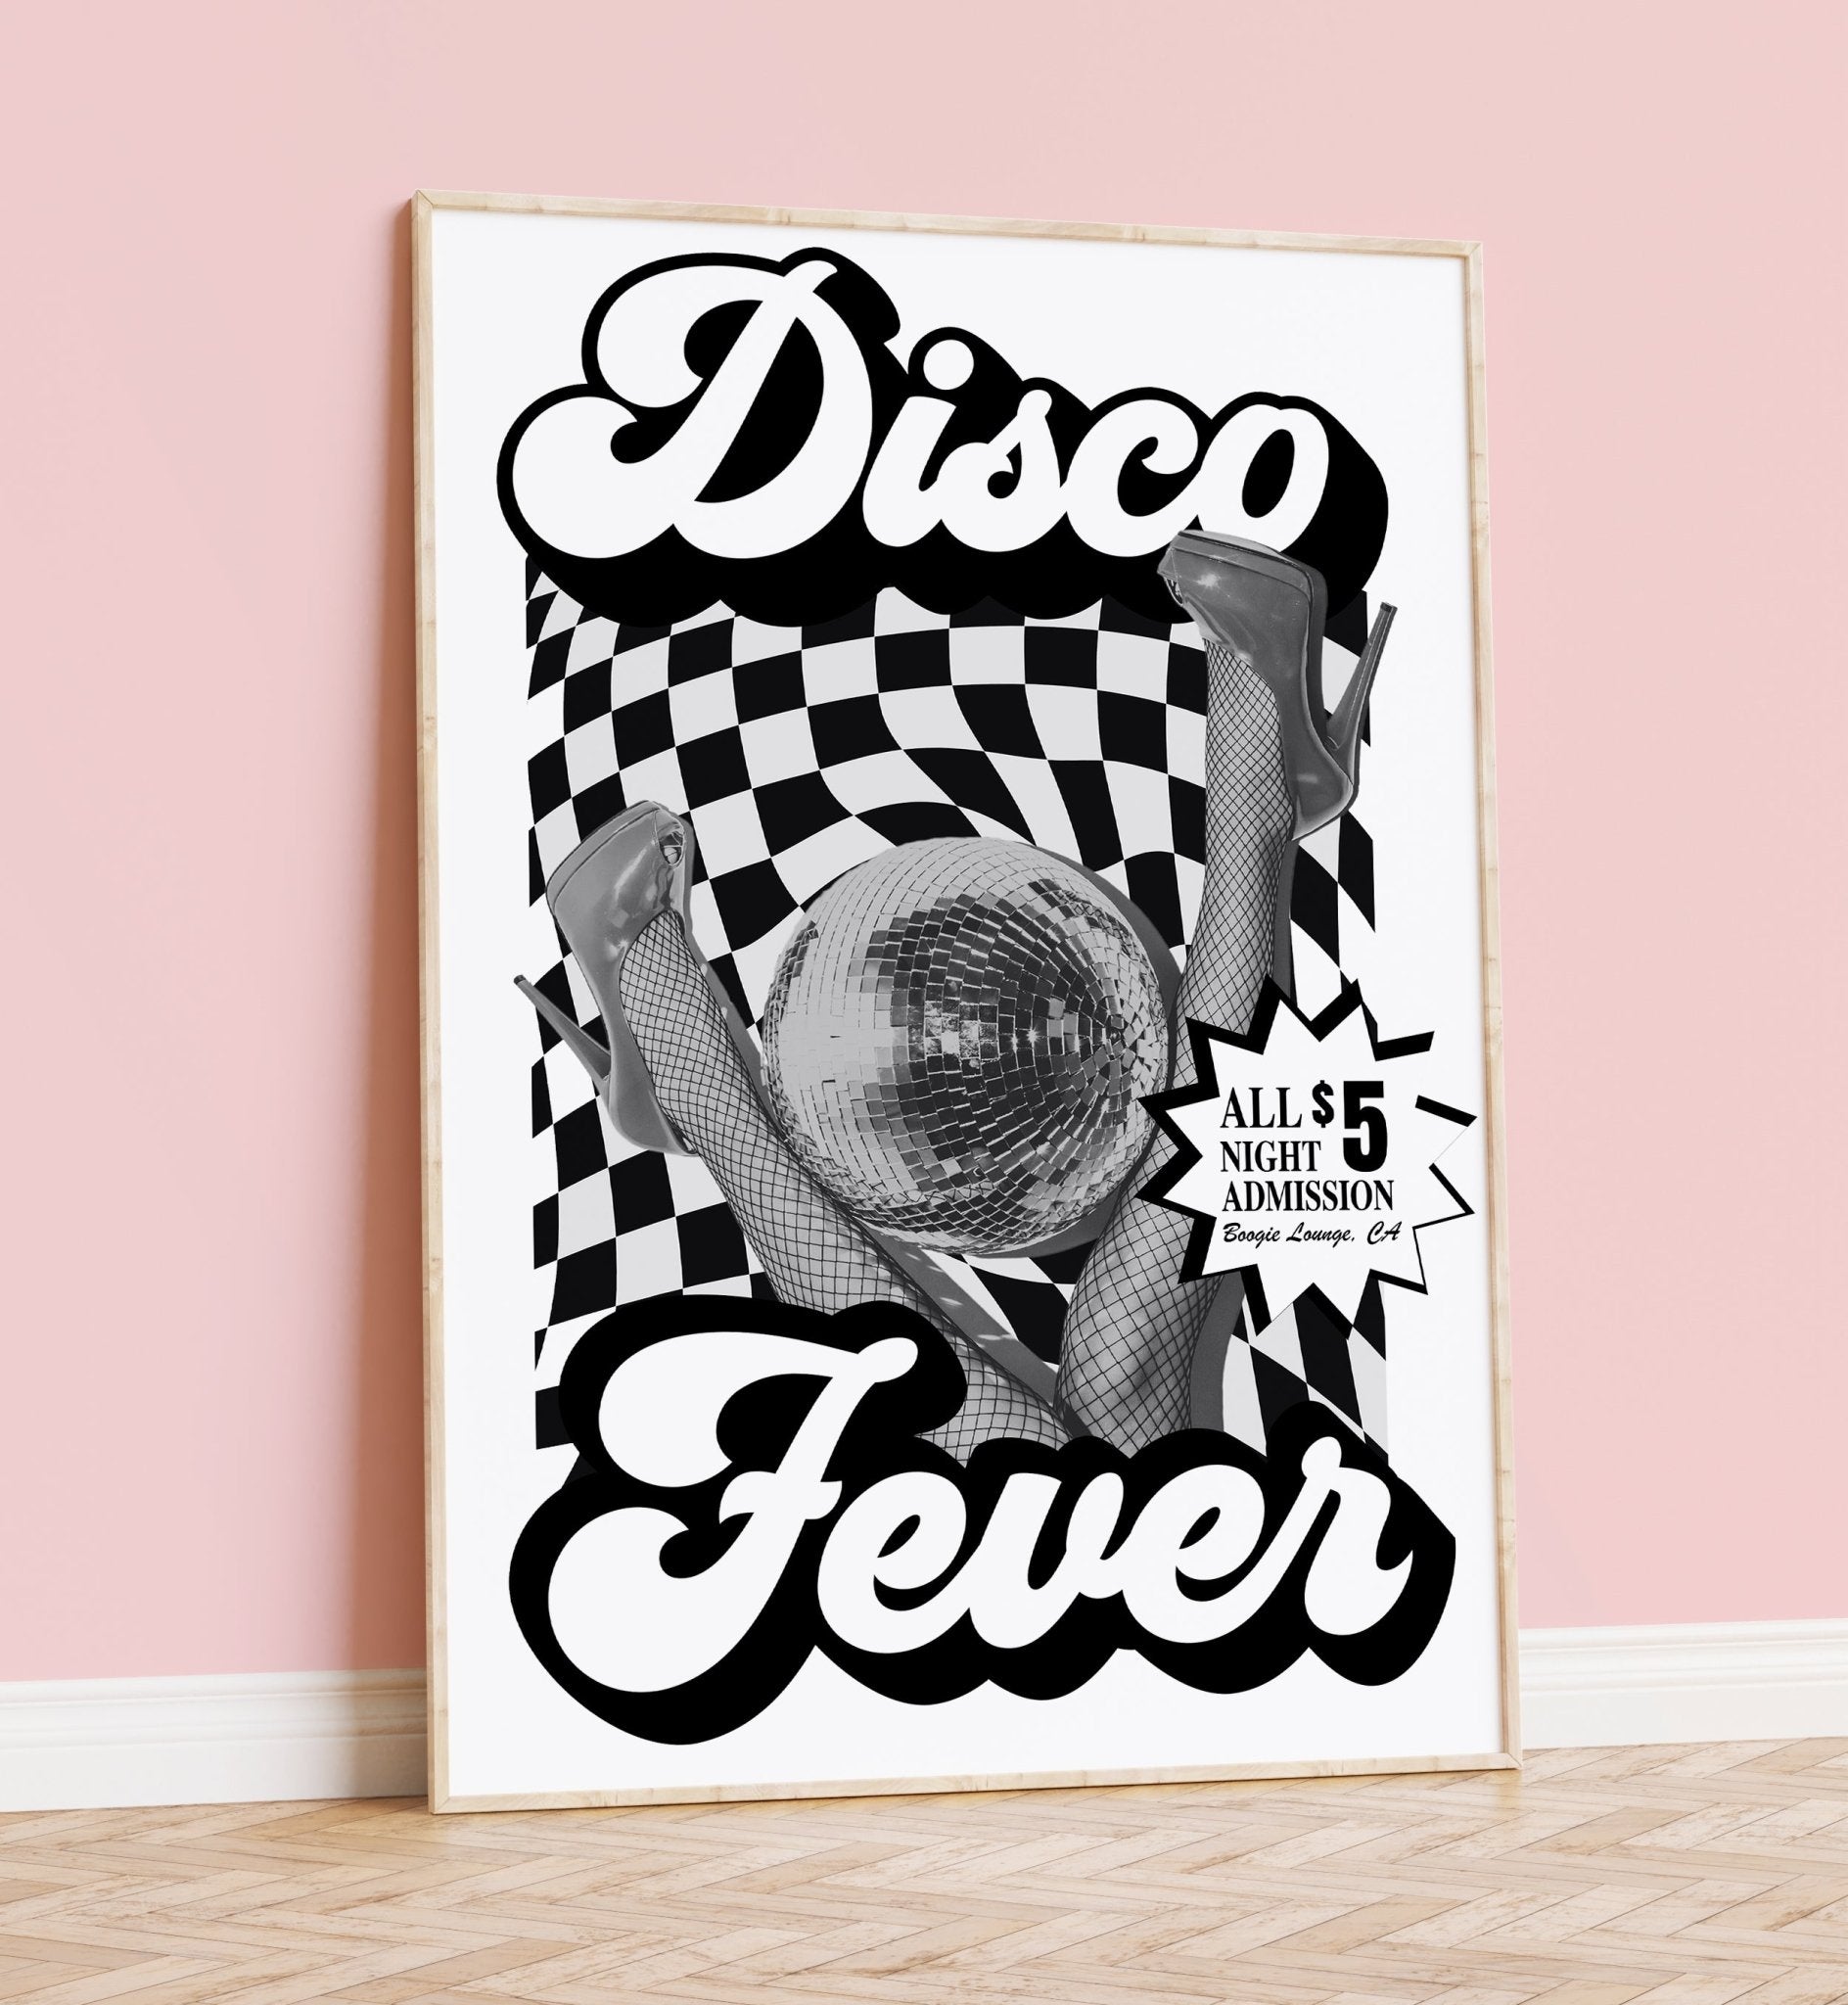 Disco Fever Wall Print